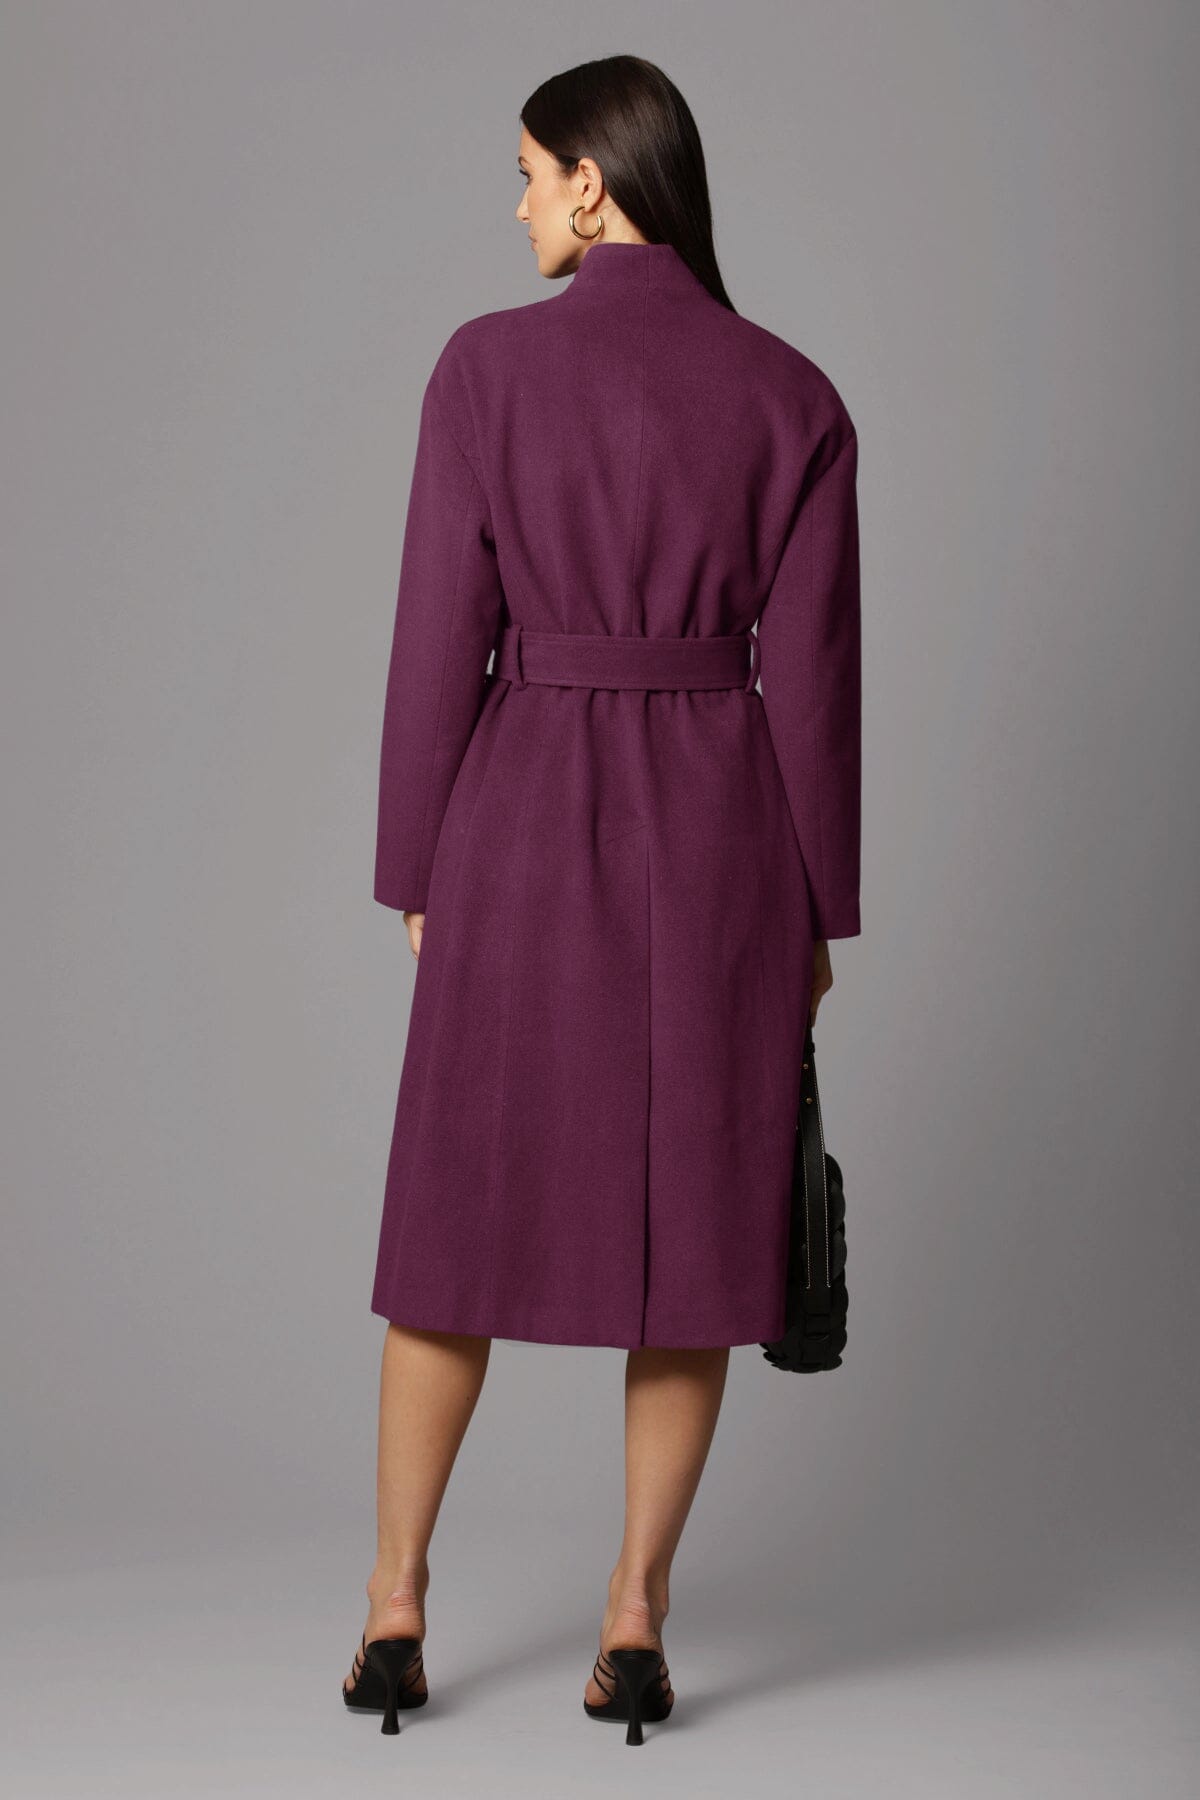 Aubergine purple wool blend overlap collar long coat jacket - figure flattering cute date night coats jackets for women